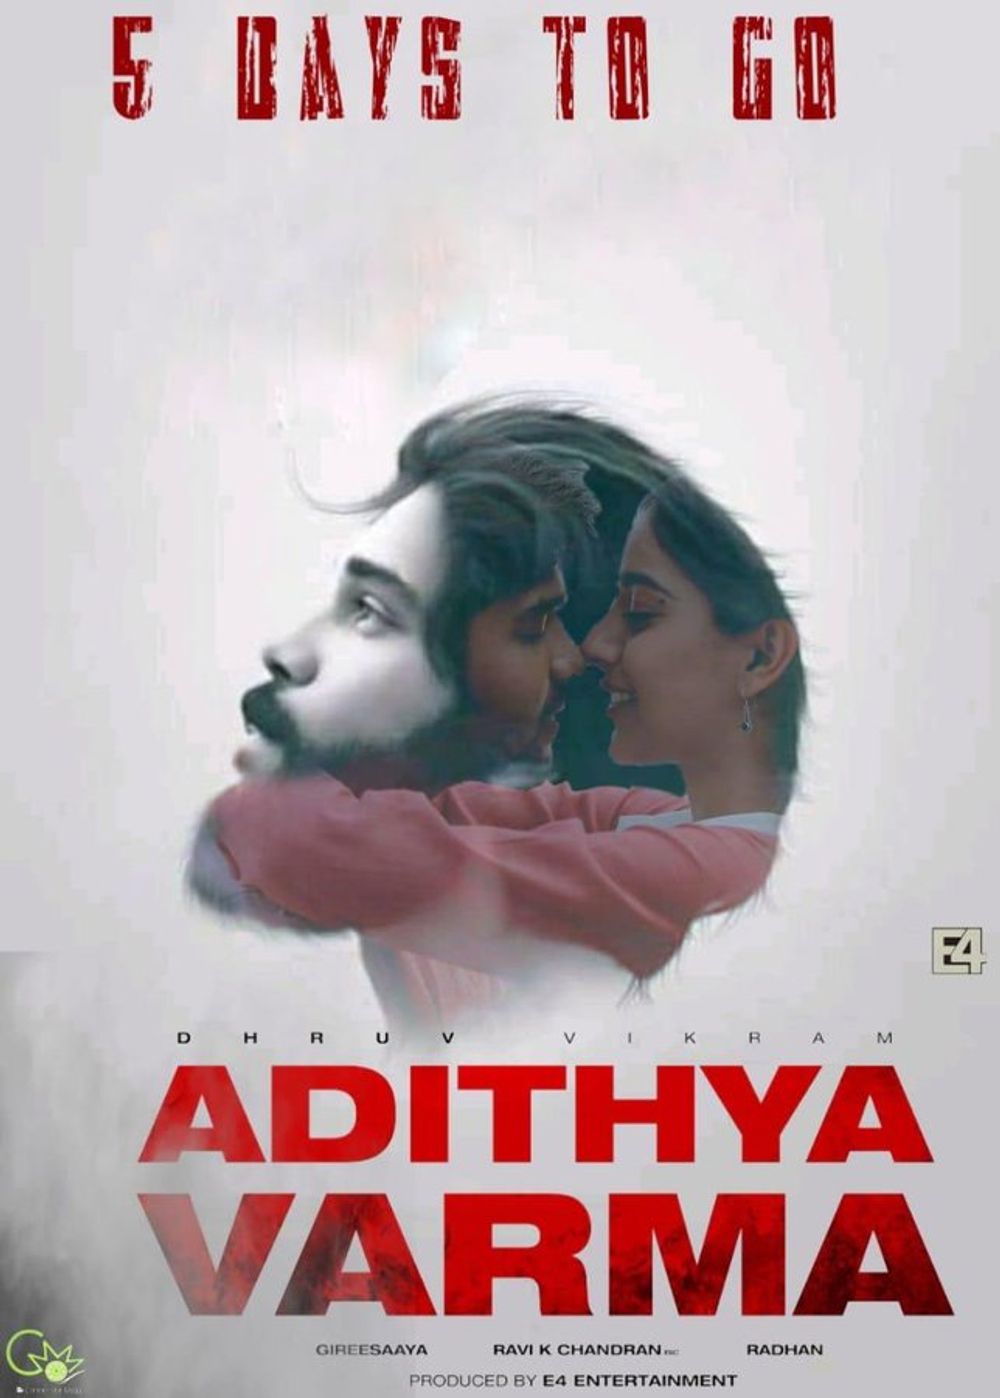 Adithya Varma on Moviebuff.com